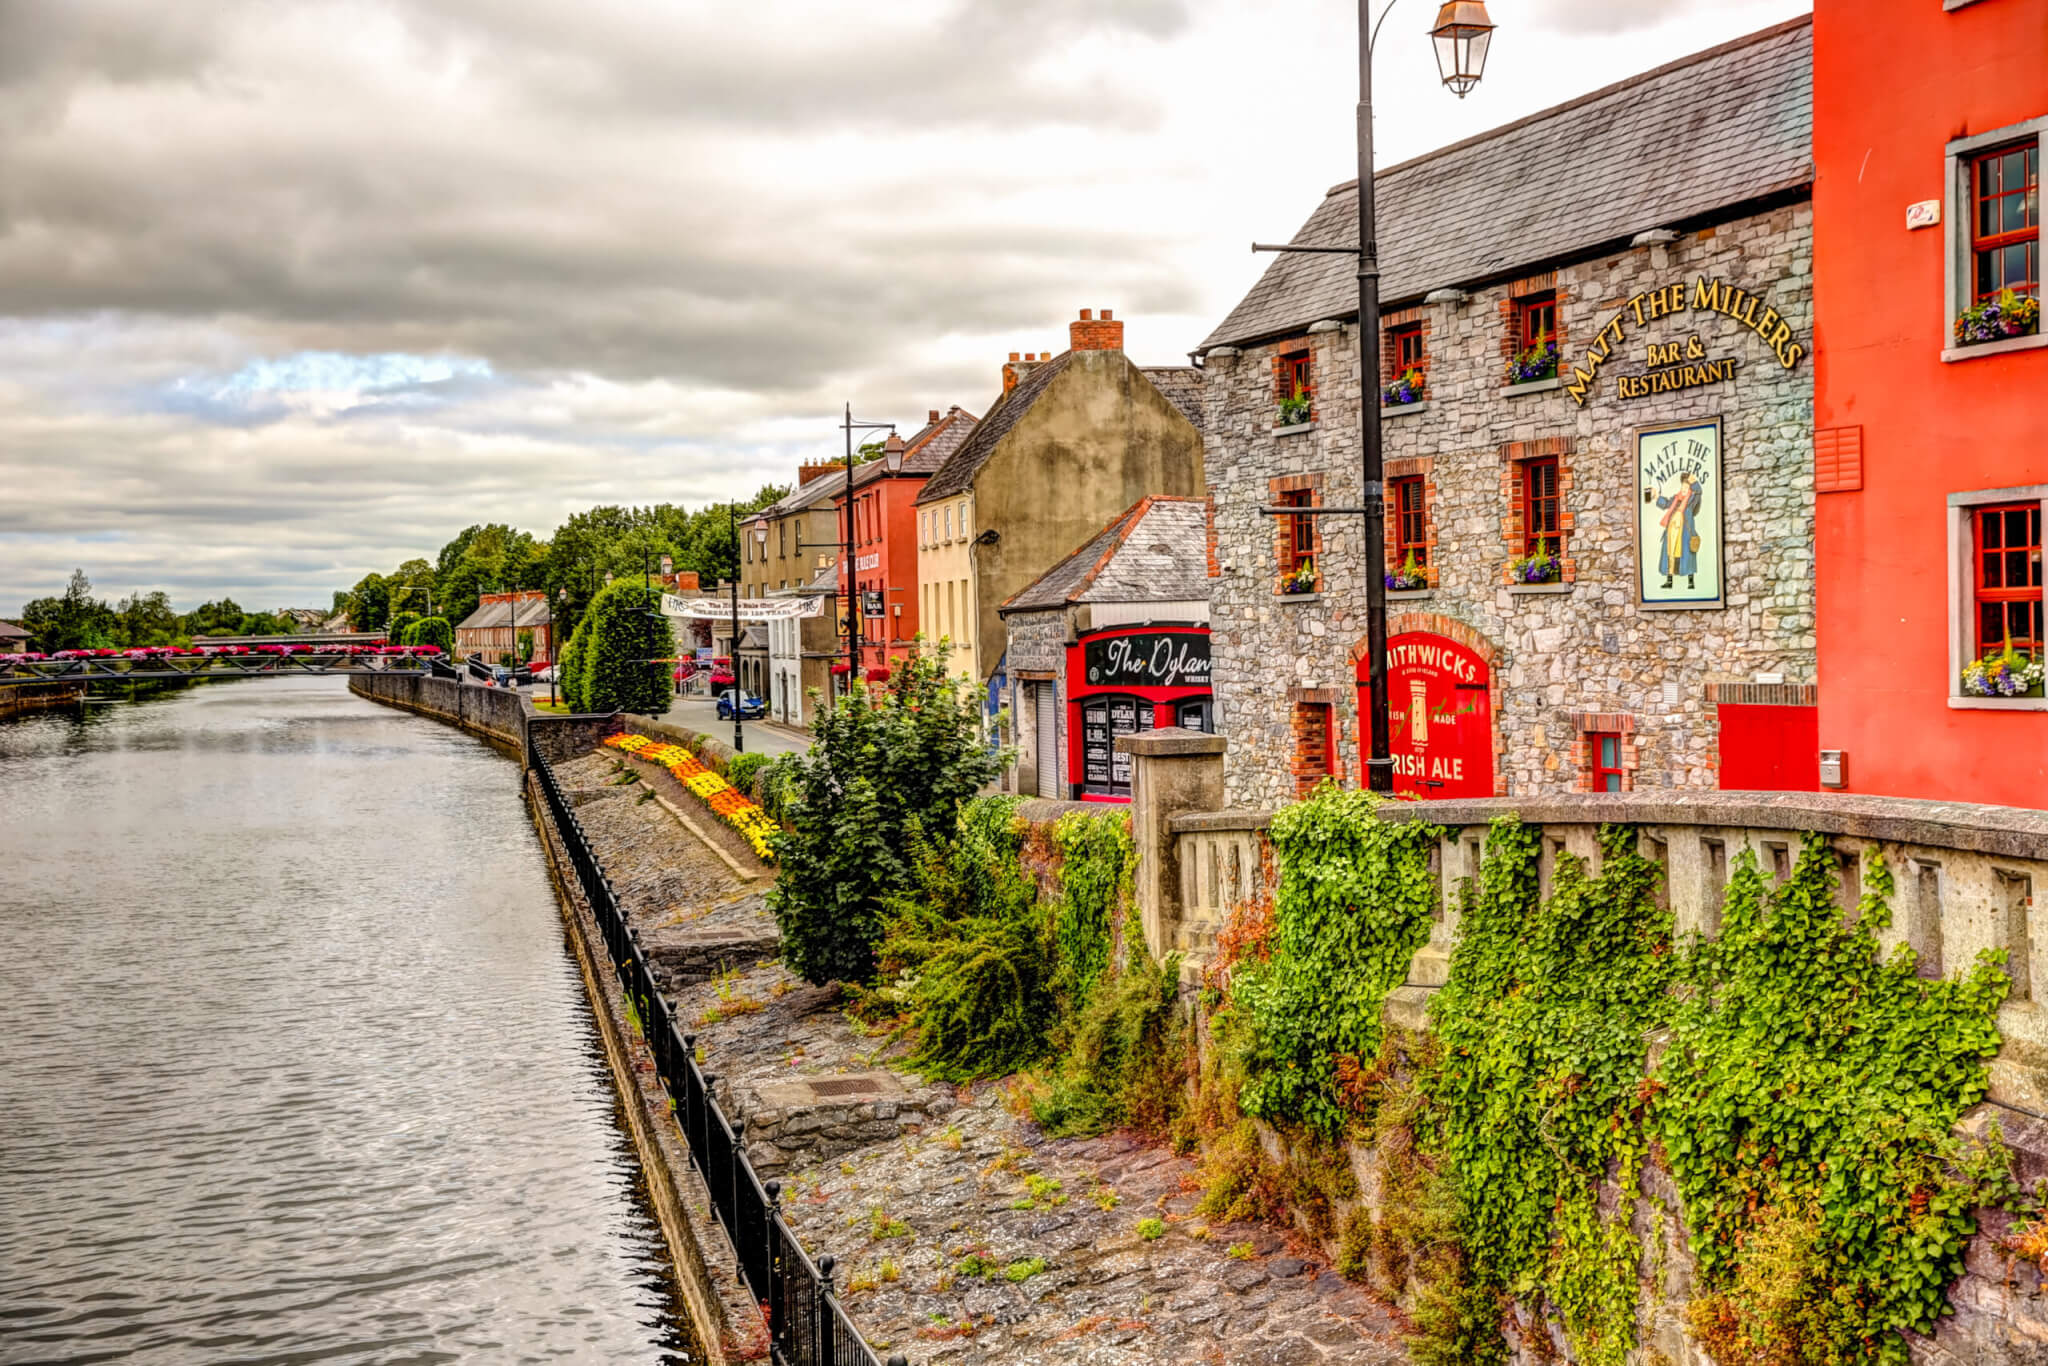 Kilkenny, Ireland - July 9, 2019: Street scenery in Kilkenny Ireland